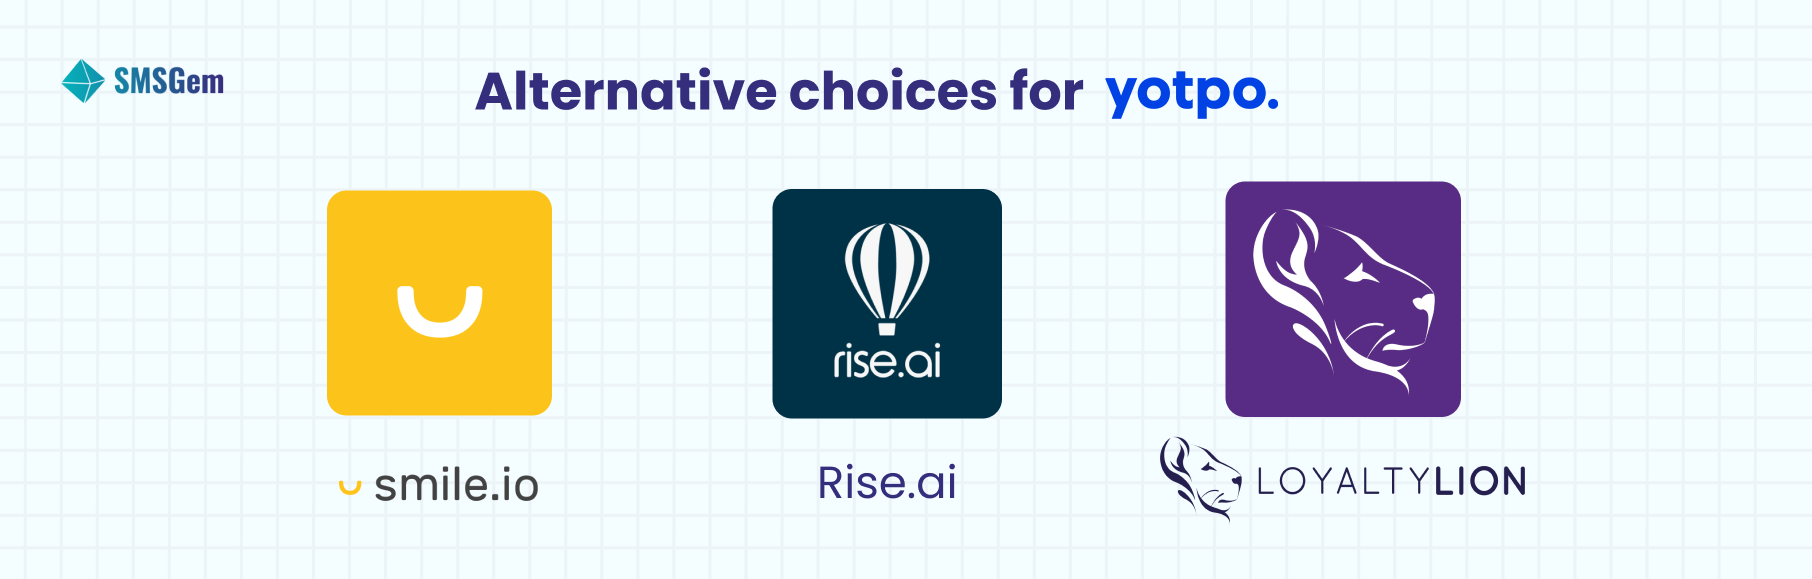 Yotpo Loyalty's Alternative Choices